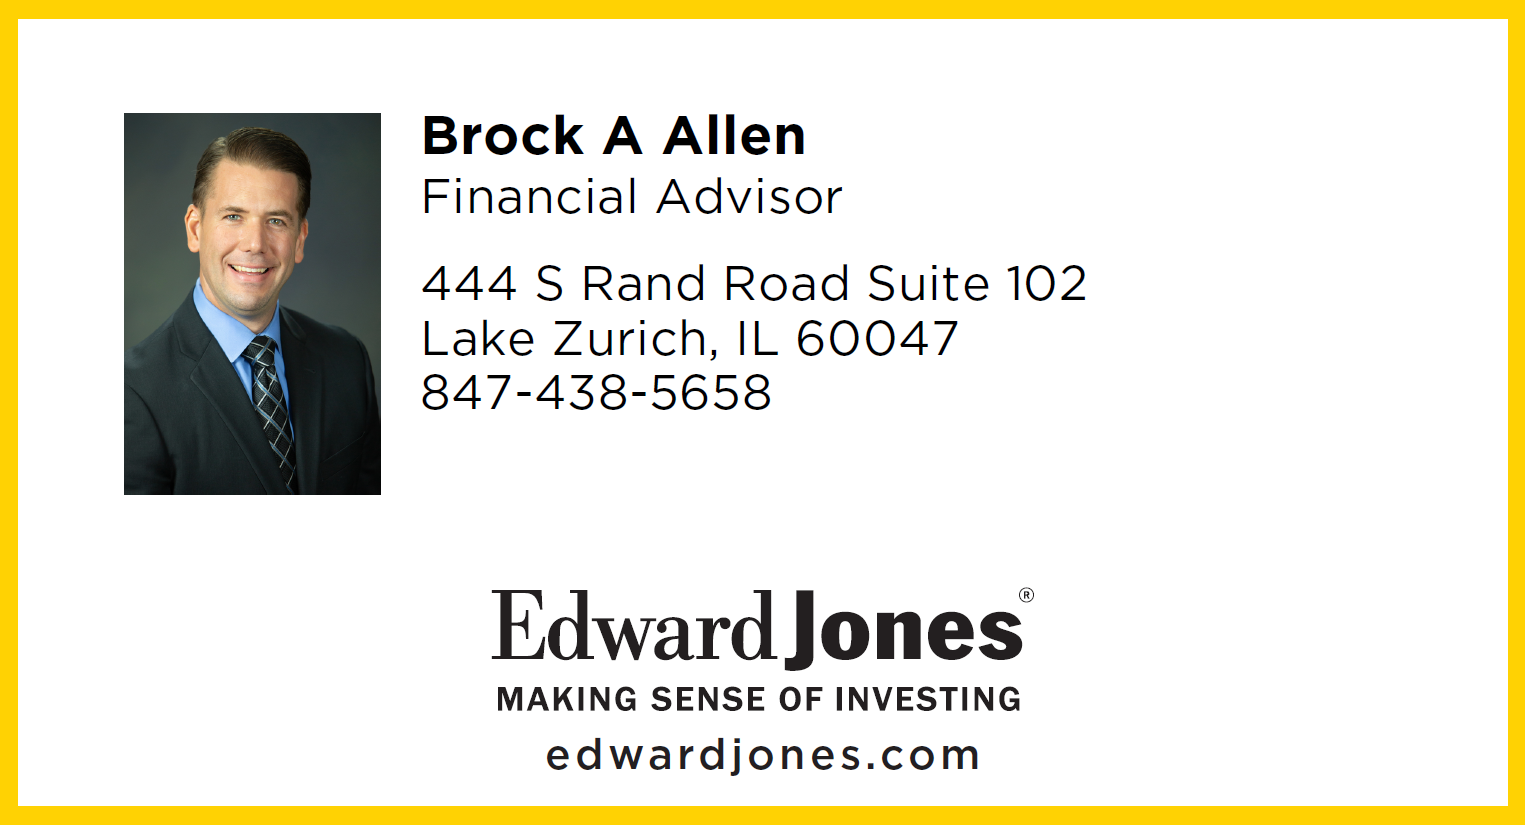 Edward Jones - Brock A Allen